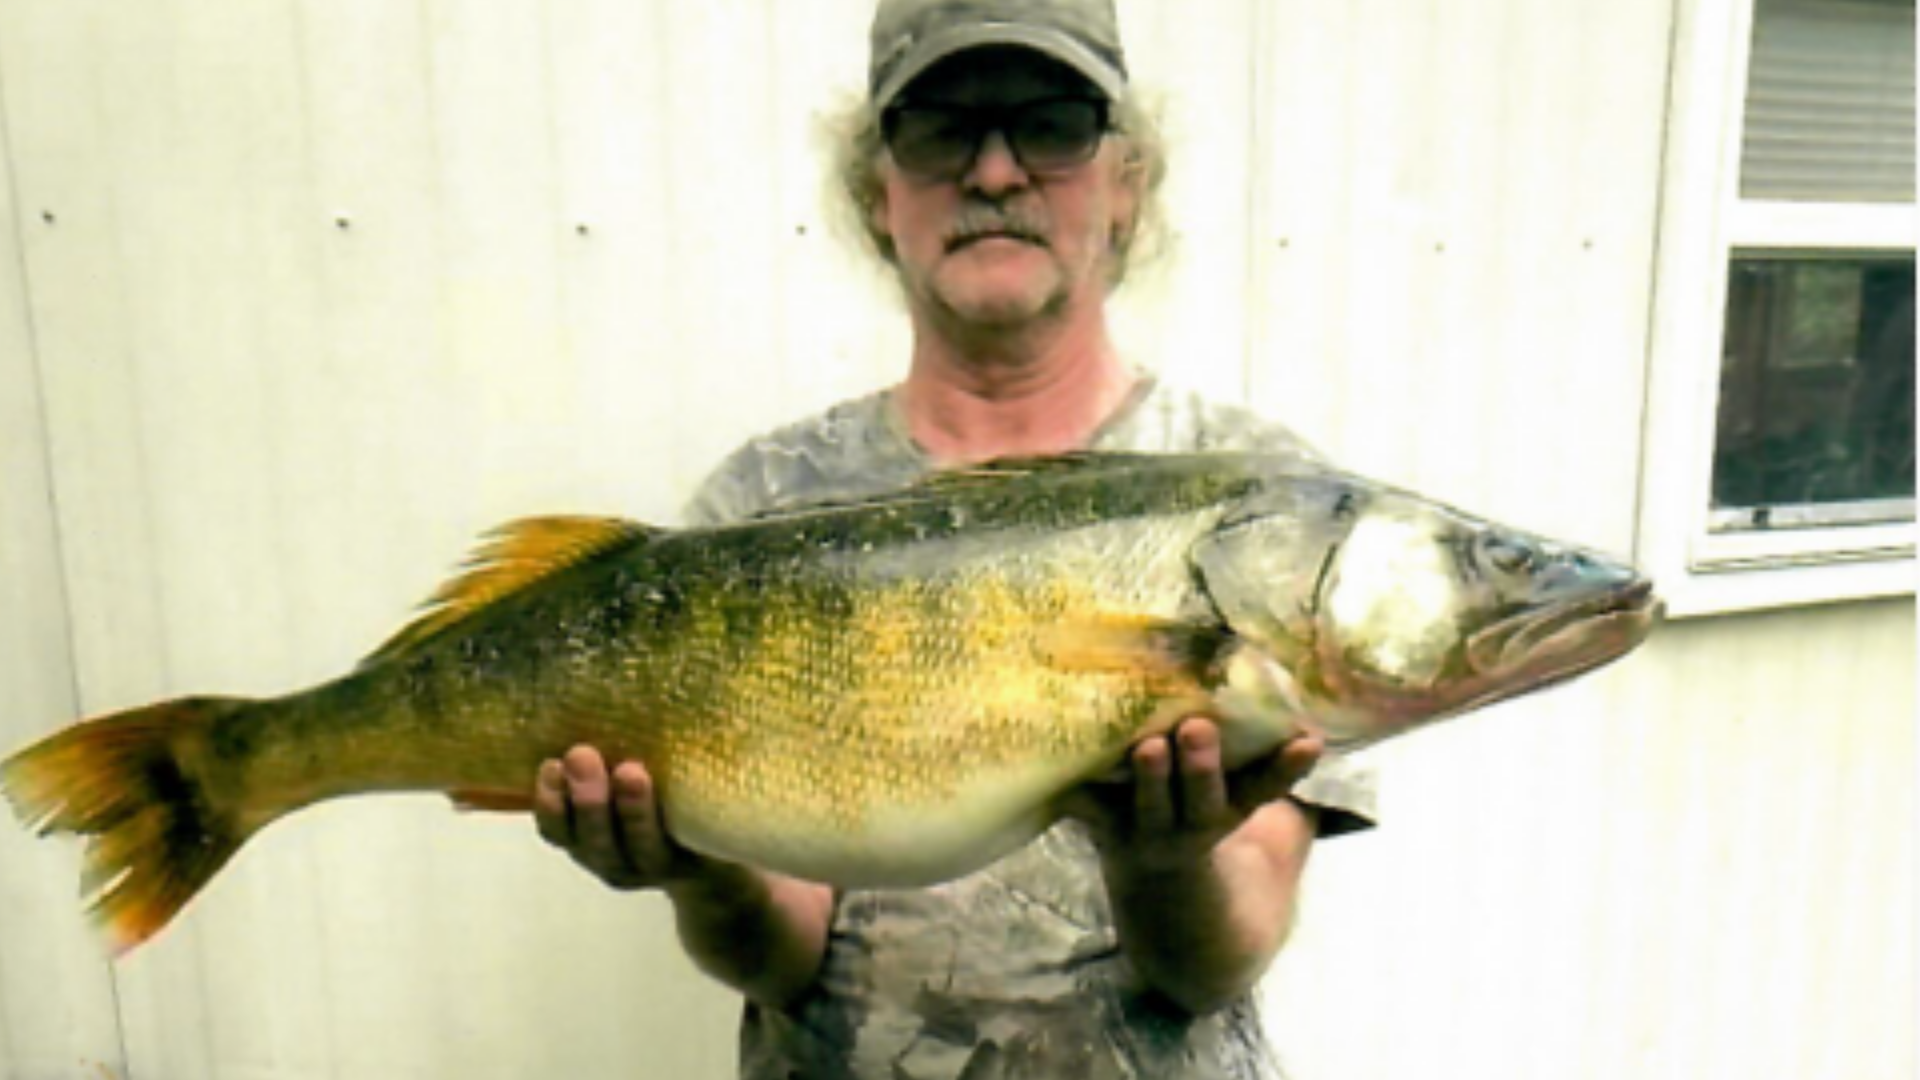 Angler Almost Ate Record-Breaking 18lb Fish Caught in Pennsylvania